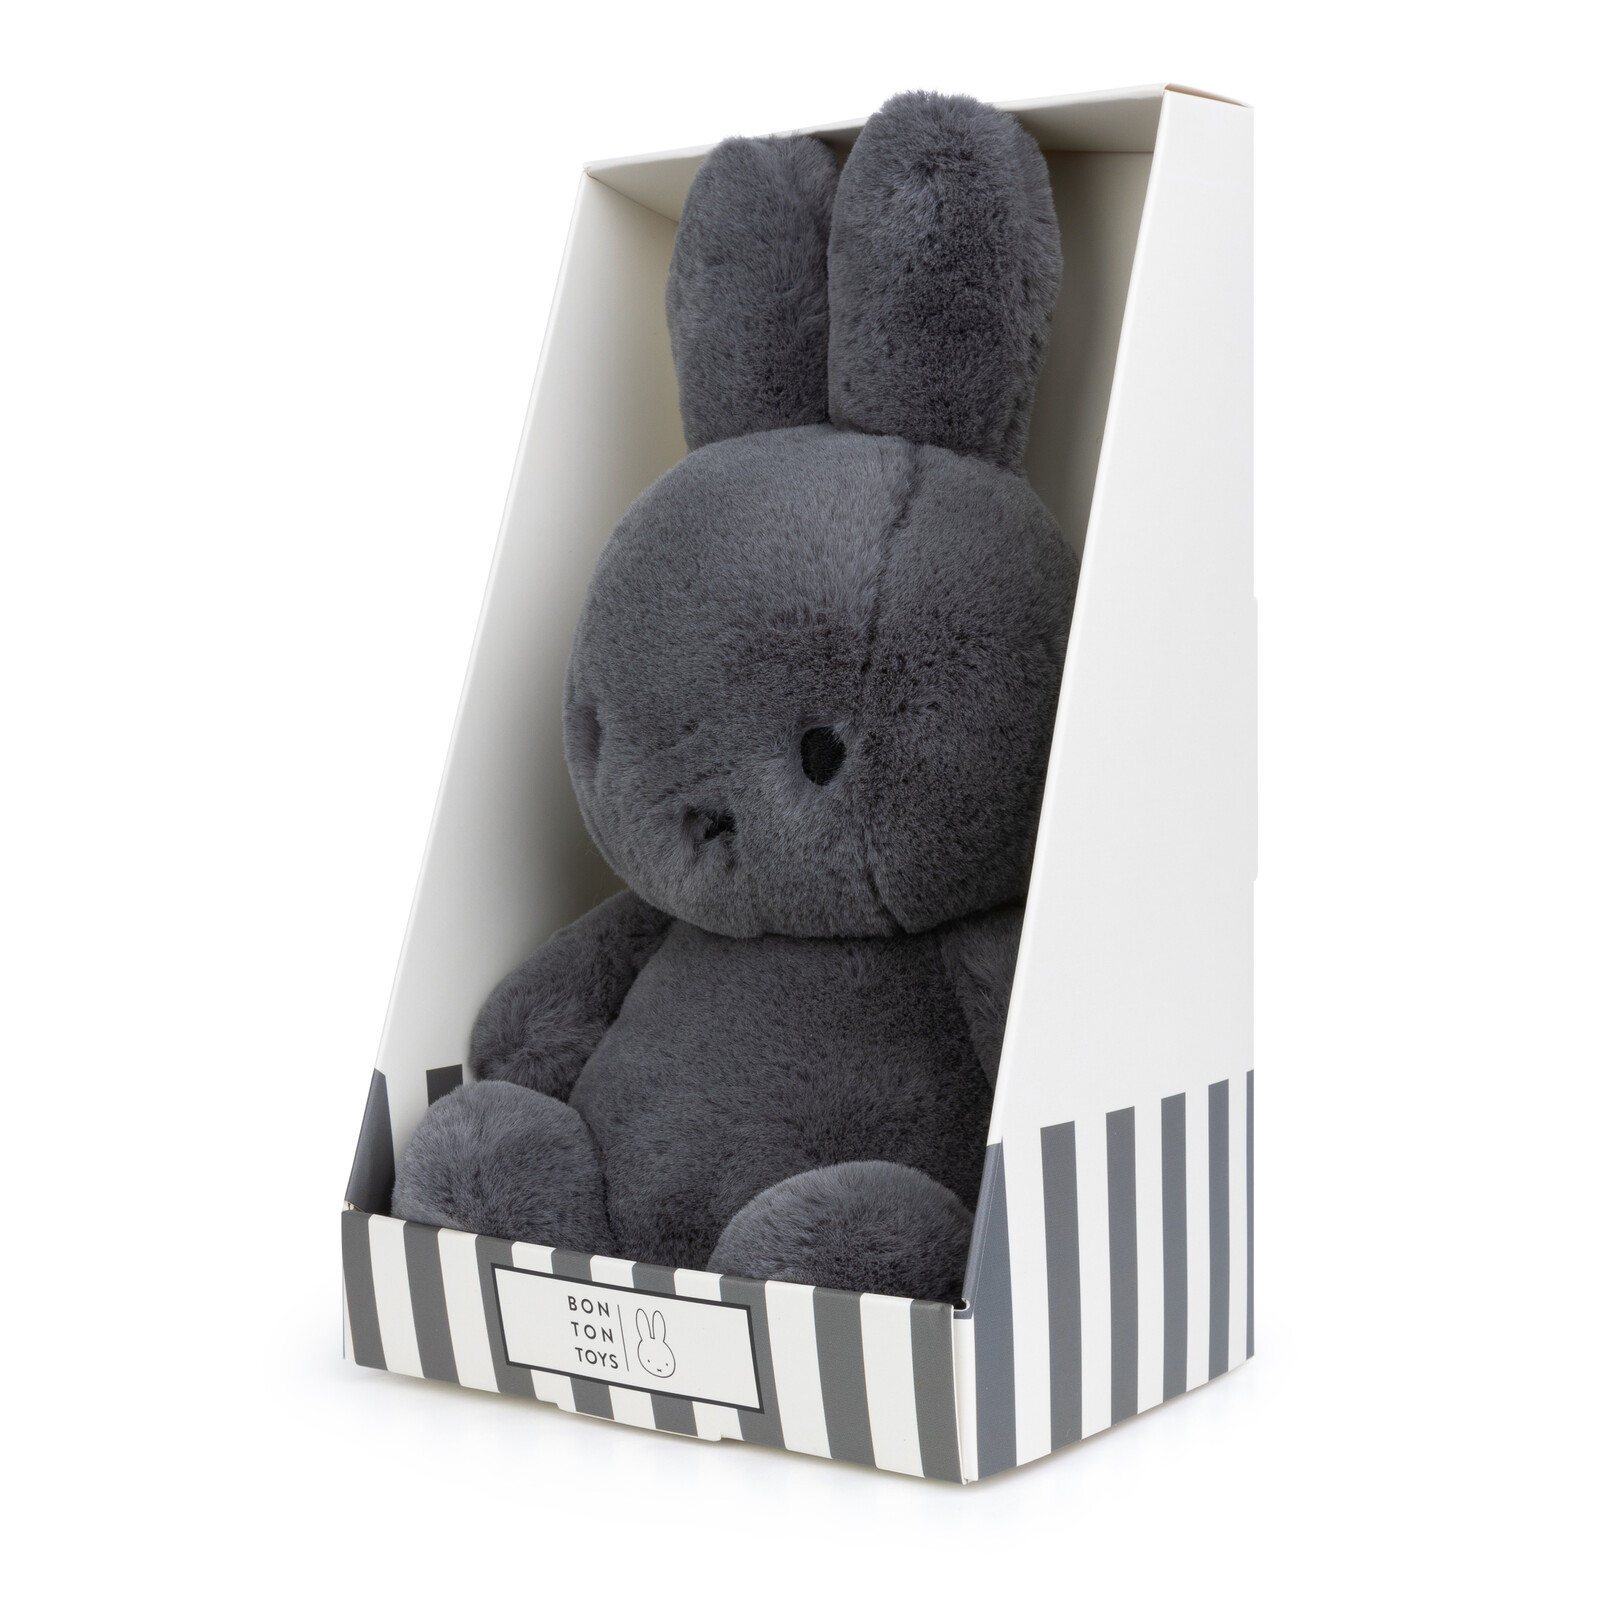 Cozy Miffy Sitting Grey in giftbox - 23 cm - 9"